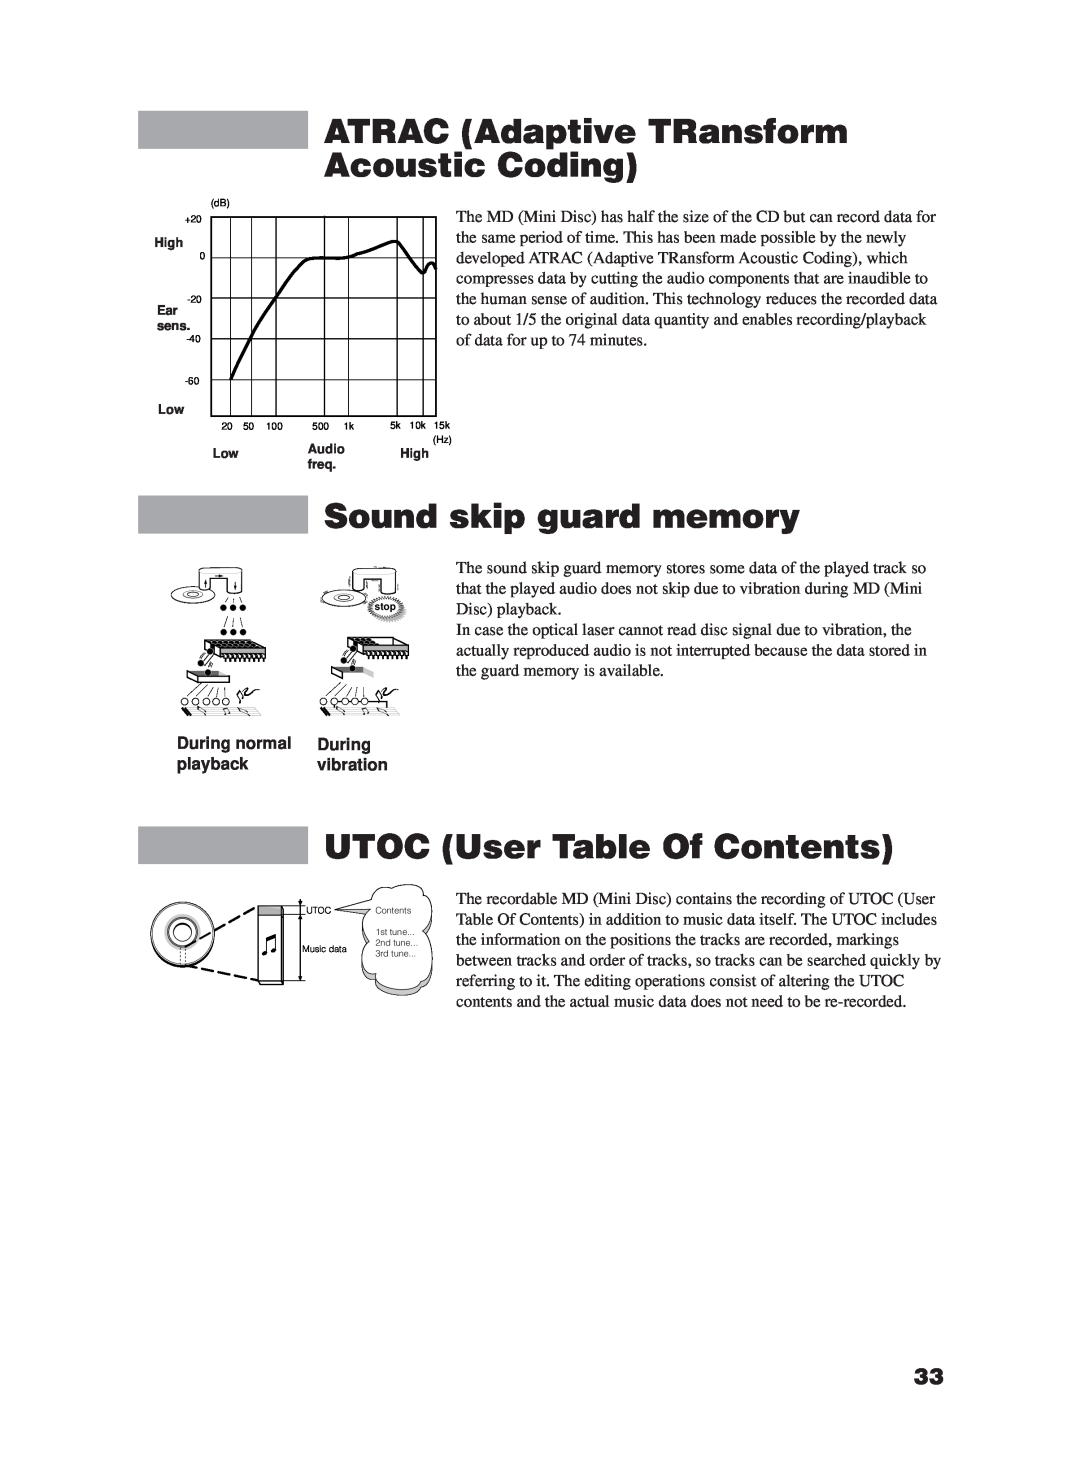 JVC XM-228BK manual ATRAC Adaptive TRansform Acoustic Coding, Sound skip guard memory, UTOC User Table Of Contents 